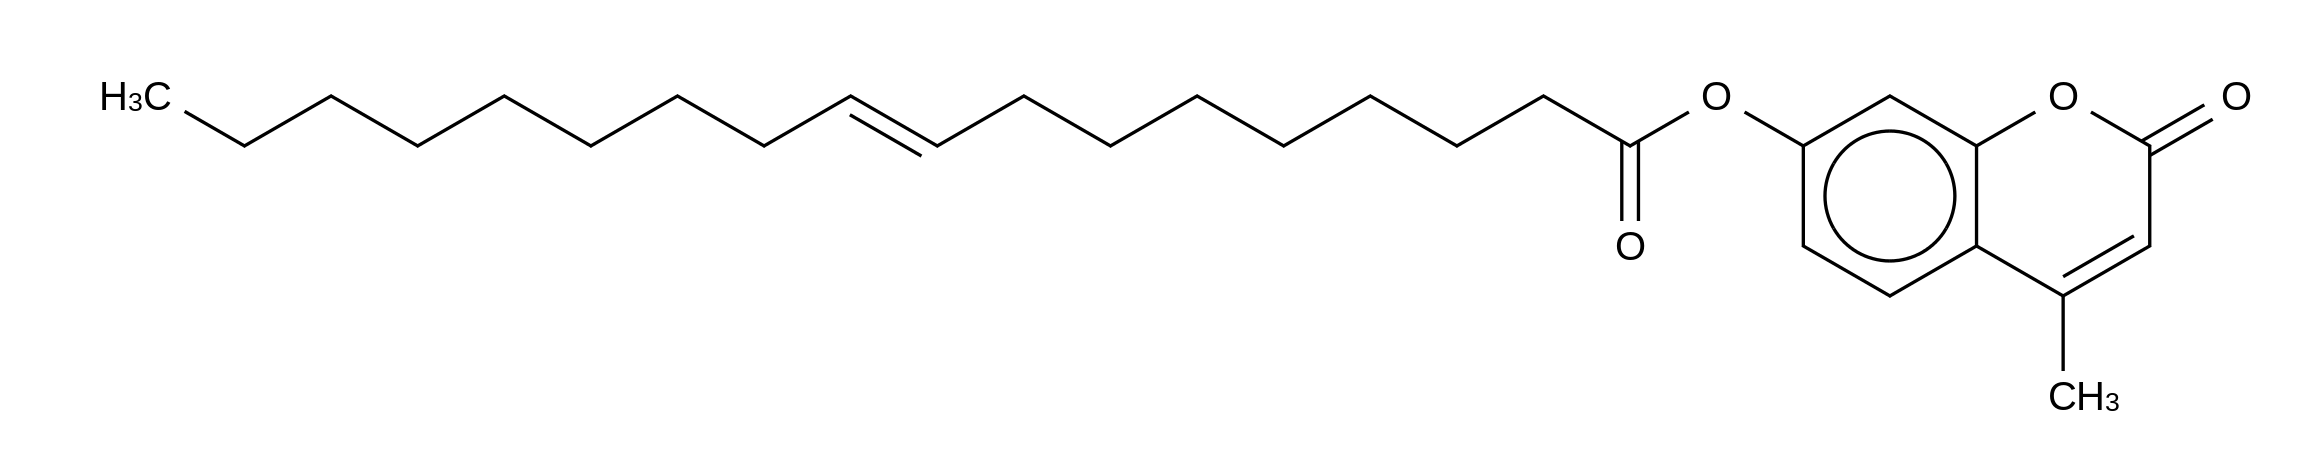 4-Methylumbelliferyl Elaidate